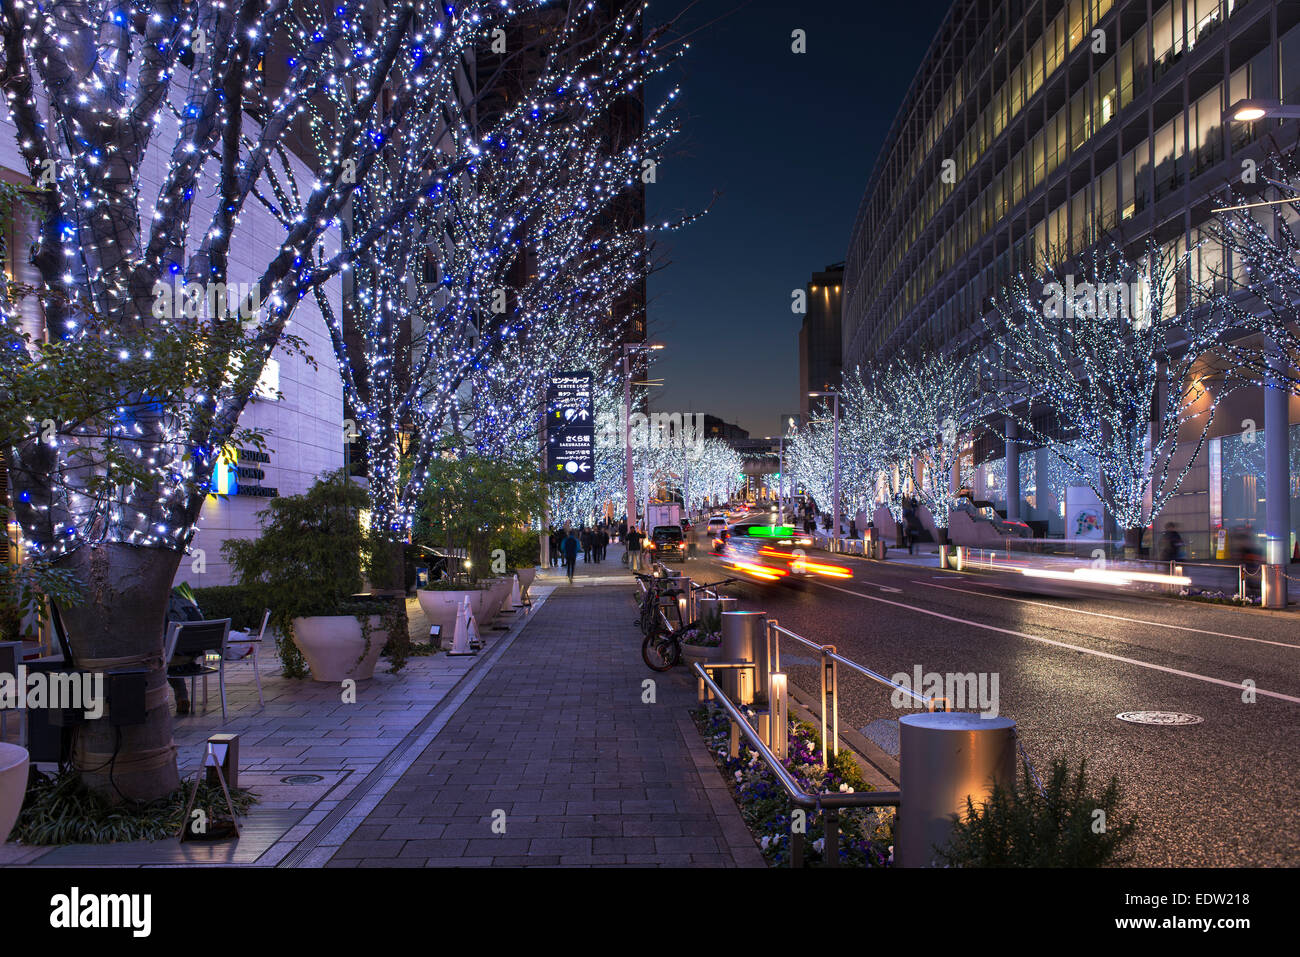 Roppongi Hills illumination over Christmas and New Years in Tokyo, Japan Stock Photo